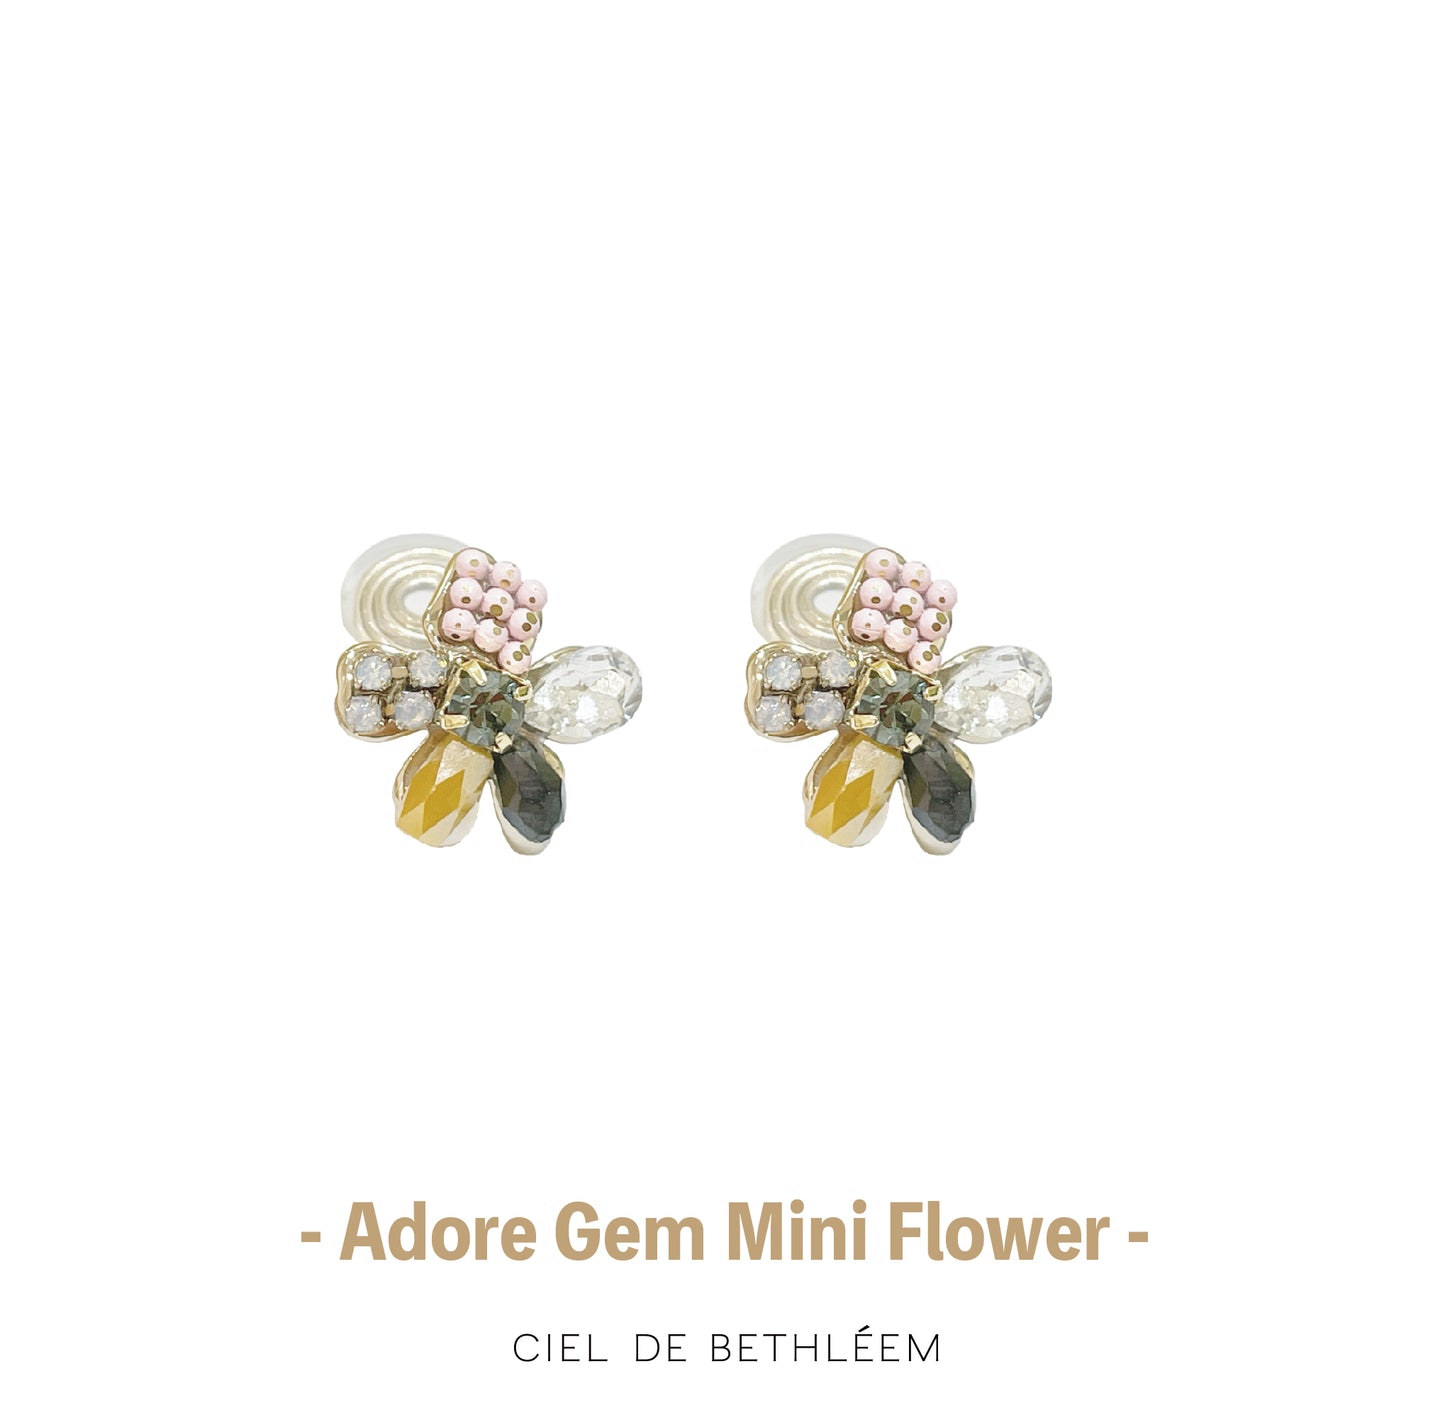 Adore Gem Mini Flower